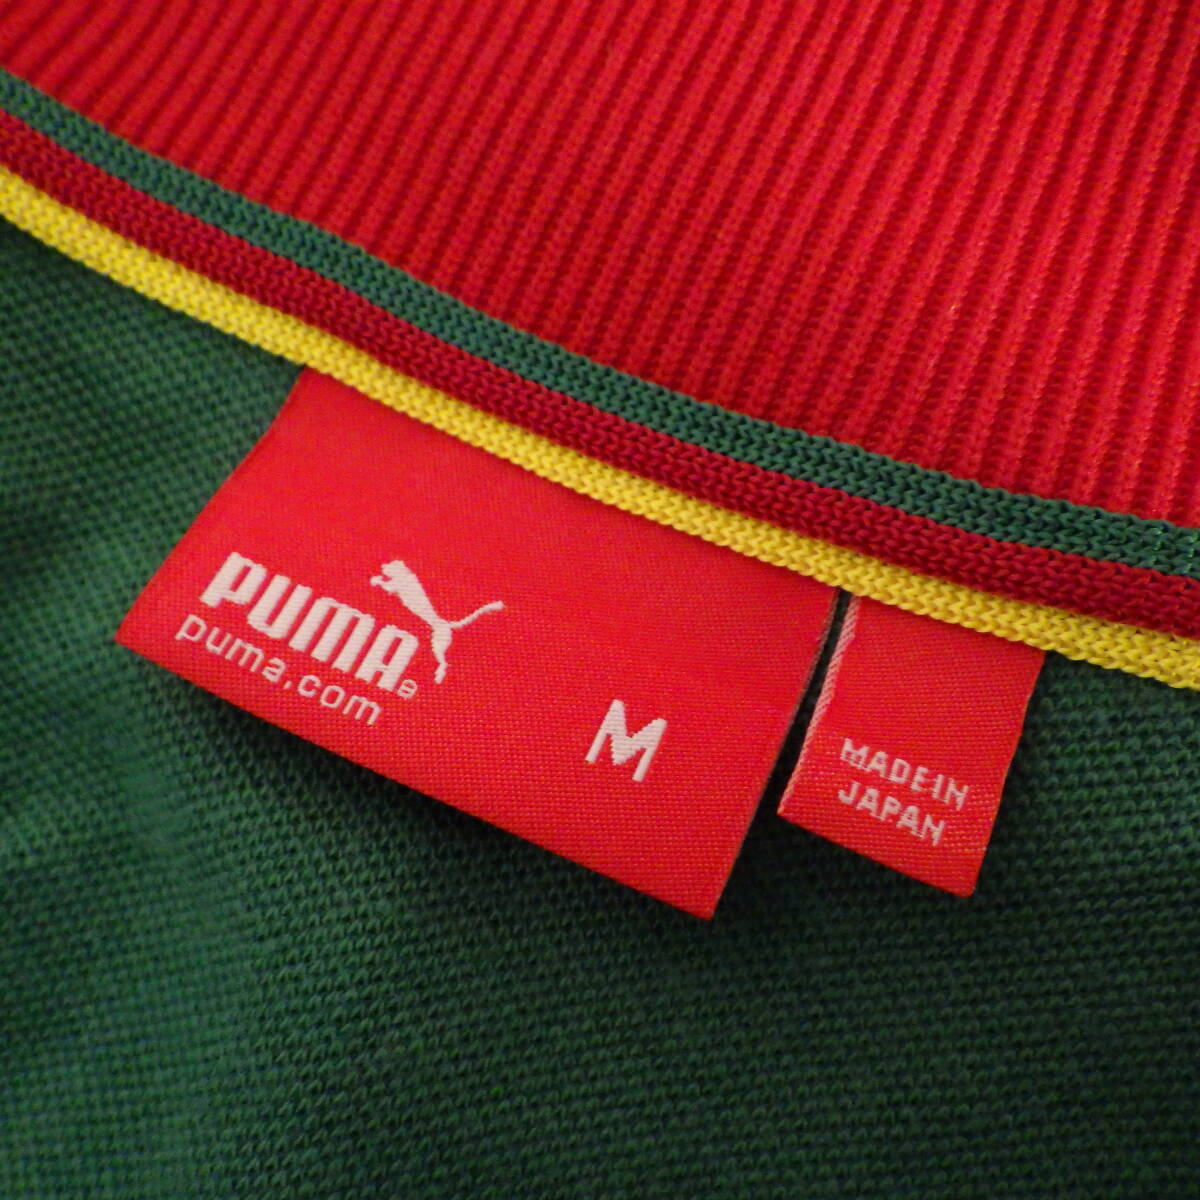 puma/ Puma черепаха Rune джерси футбол спортивная куртка женский M размер 